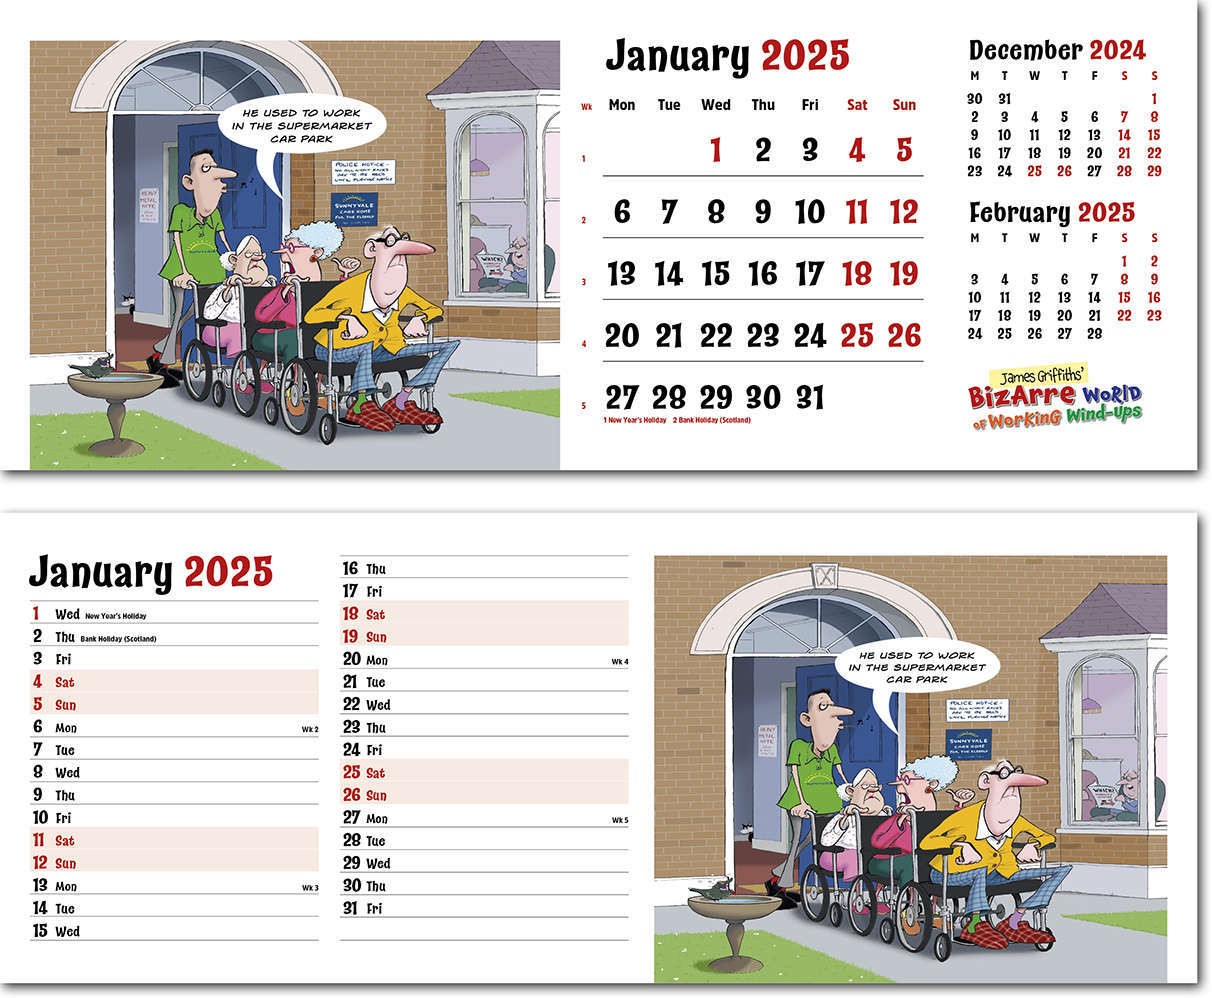 Bizarre World of Working Wind Ups Note Station Desk Calendar